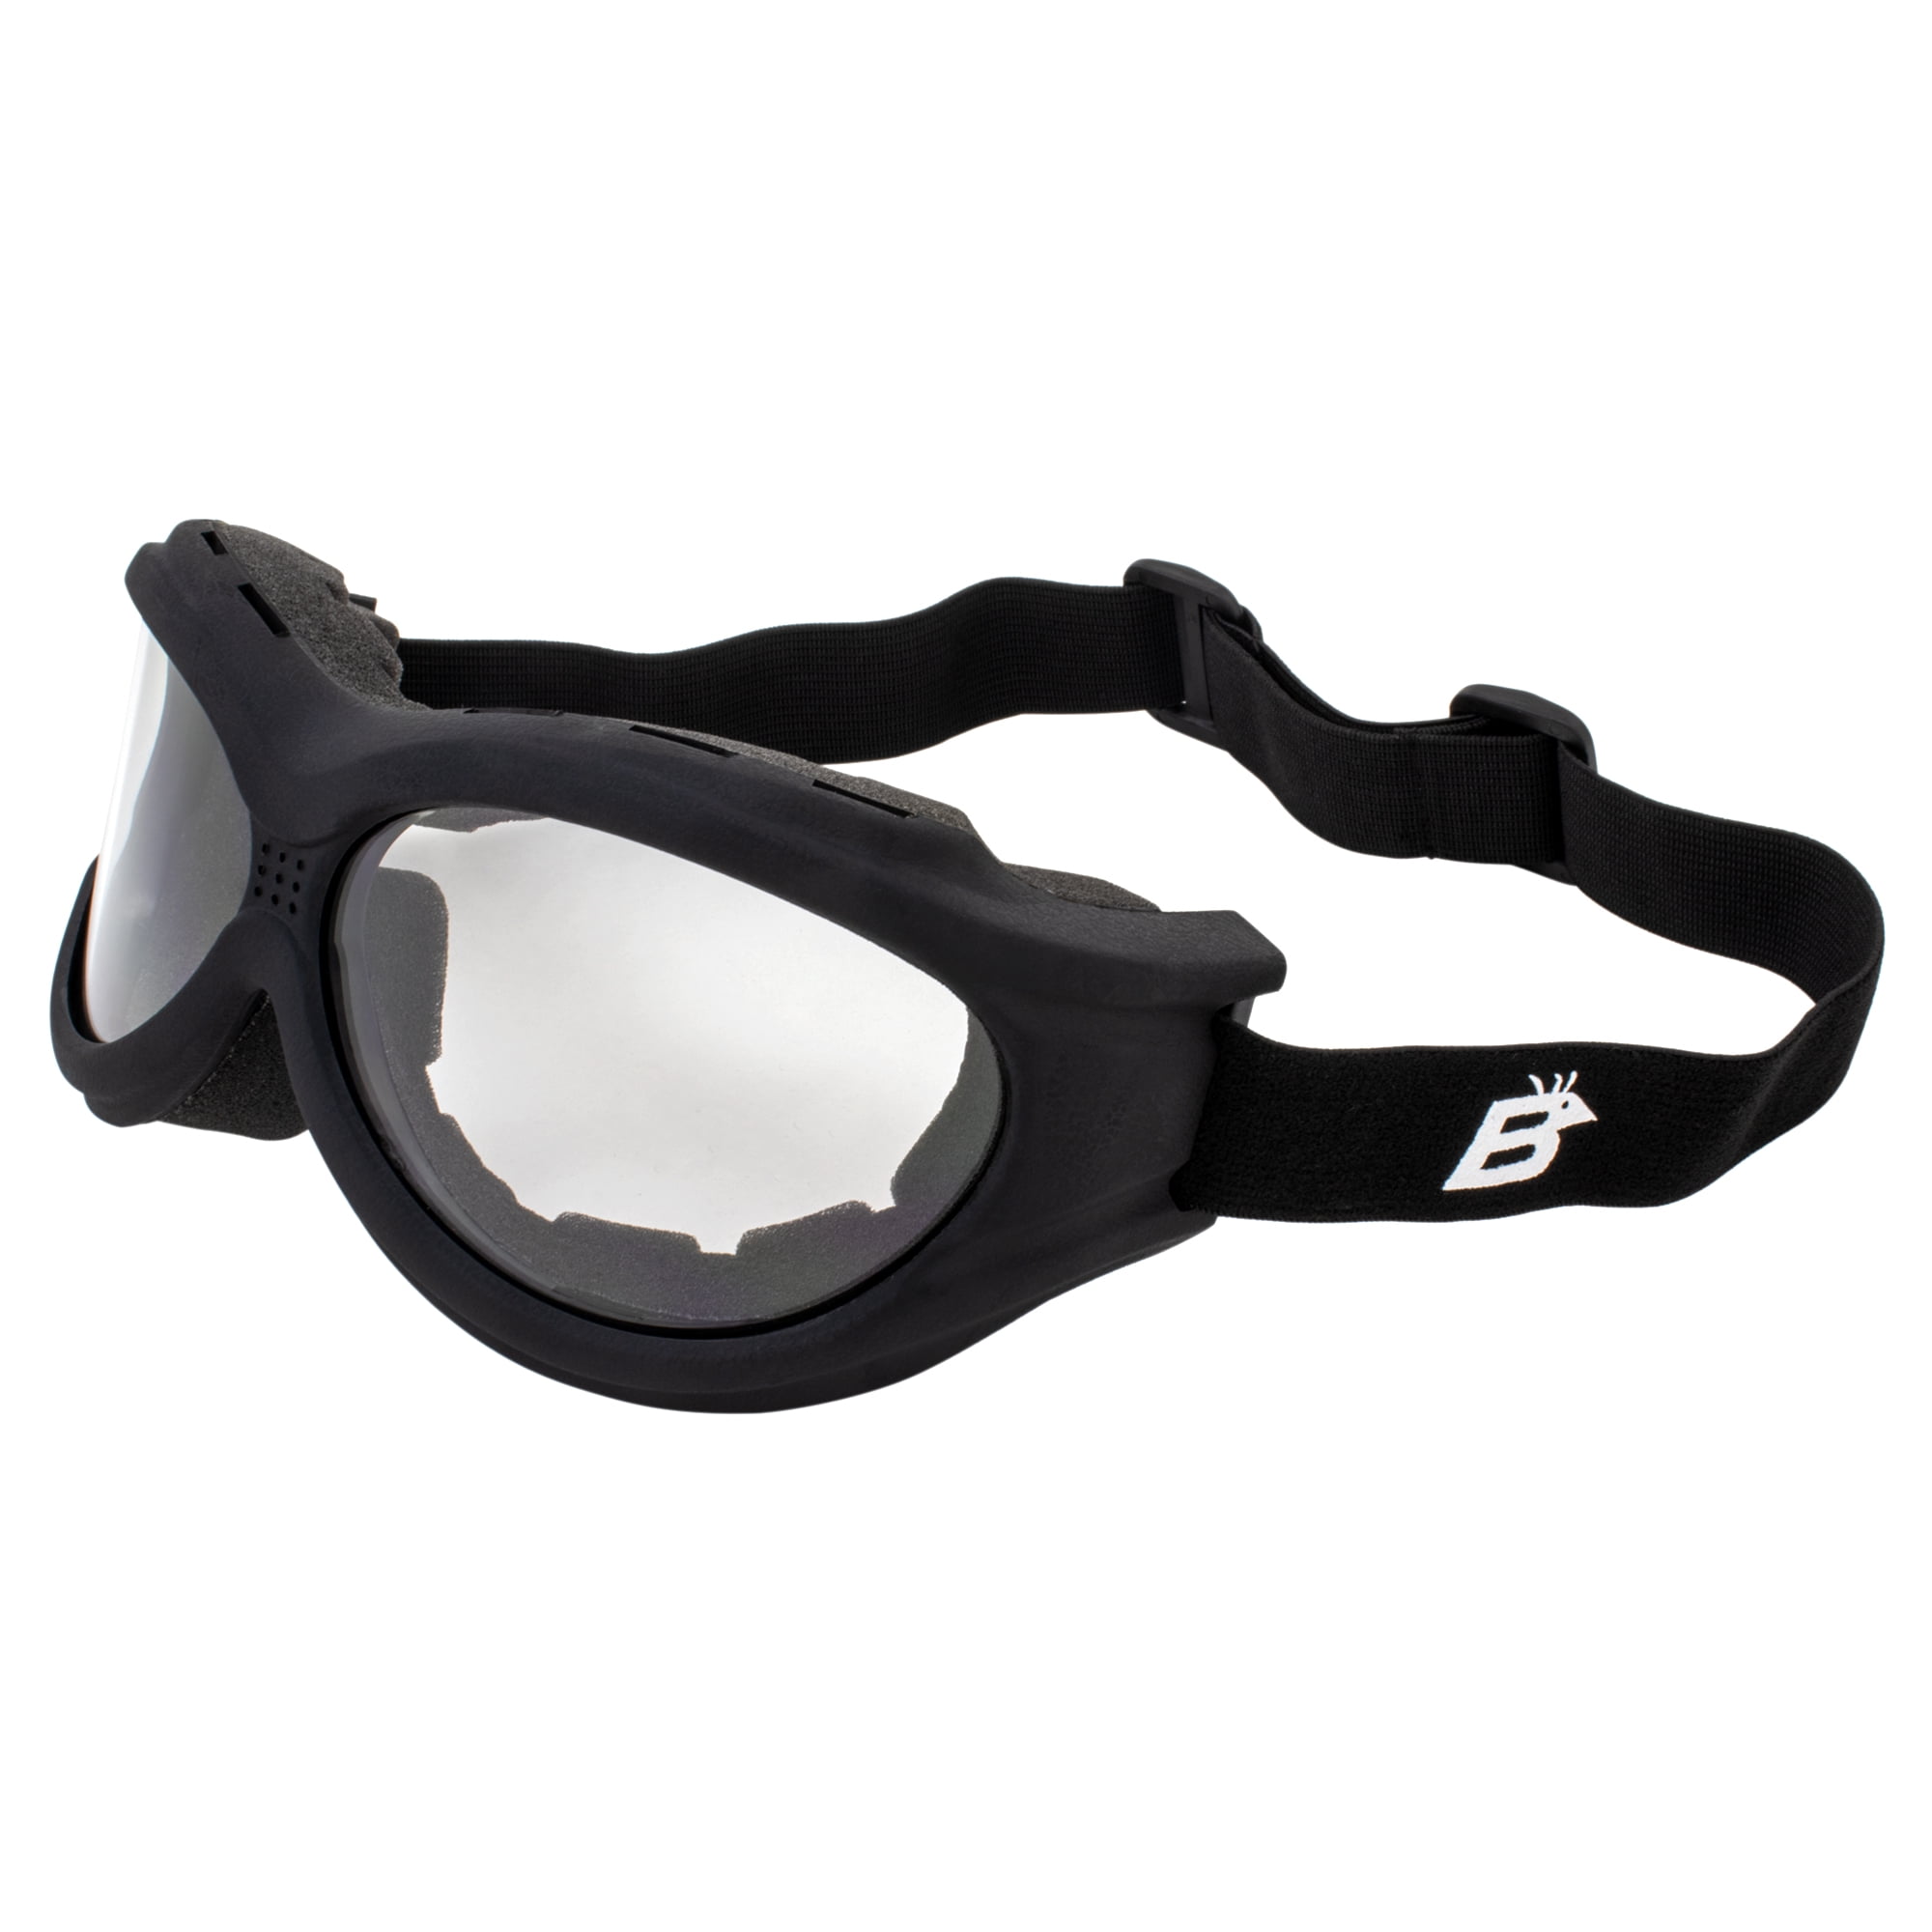 Birdz Eyewear Vulture Over The Glasses Fit Over Most Eyeglasses Smoke Lens Goggles OTG